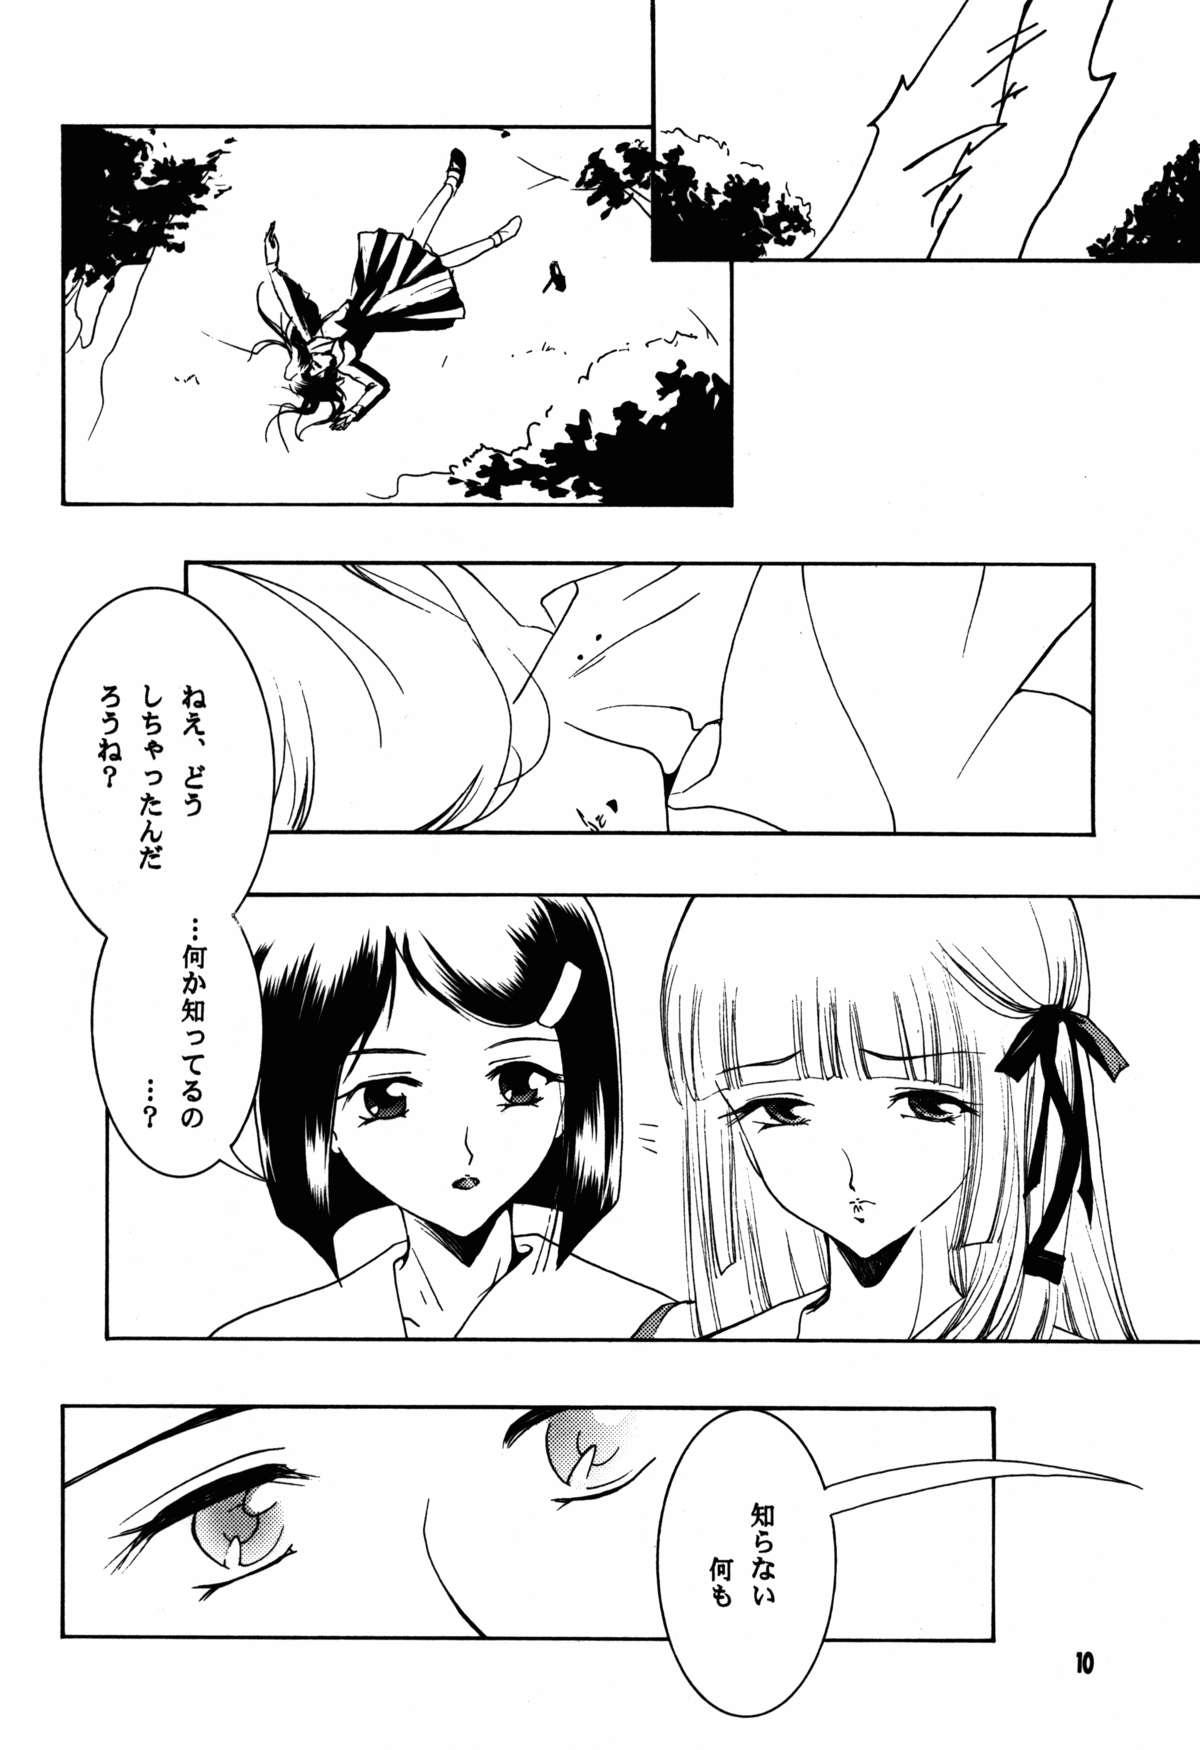 Putas Hadashi no VAMPIRE 17 - Vampire princess miyu Shower - Page 10